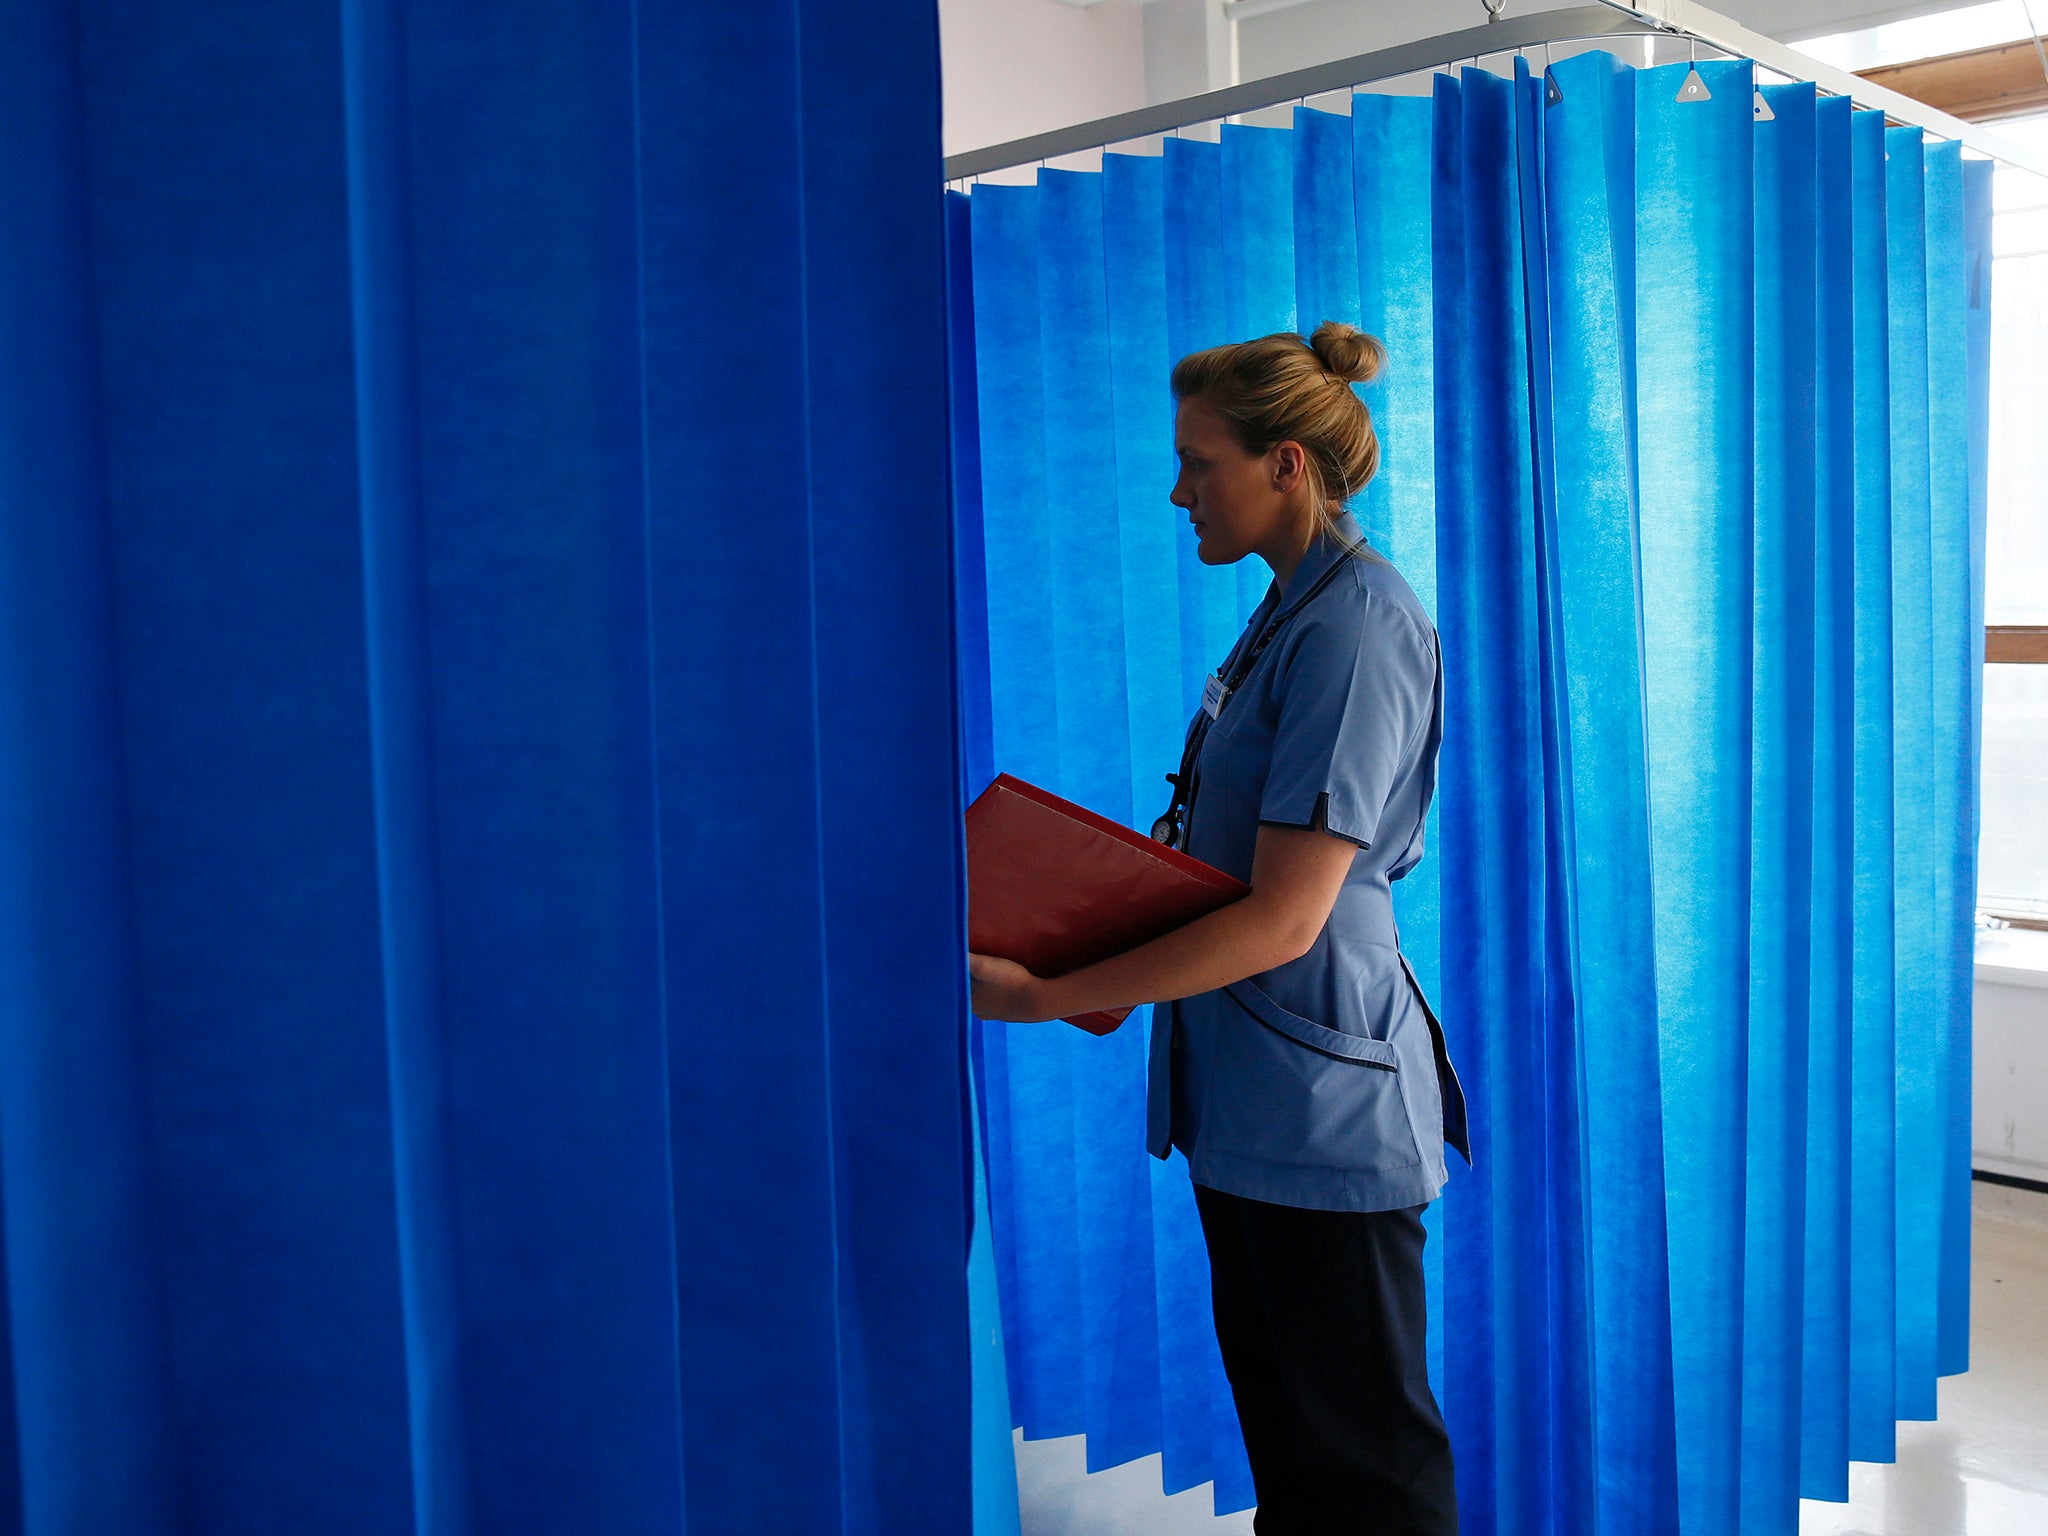 More than 33,000 nurses left the profession last year.